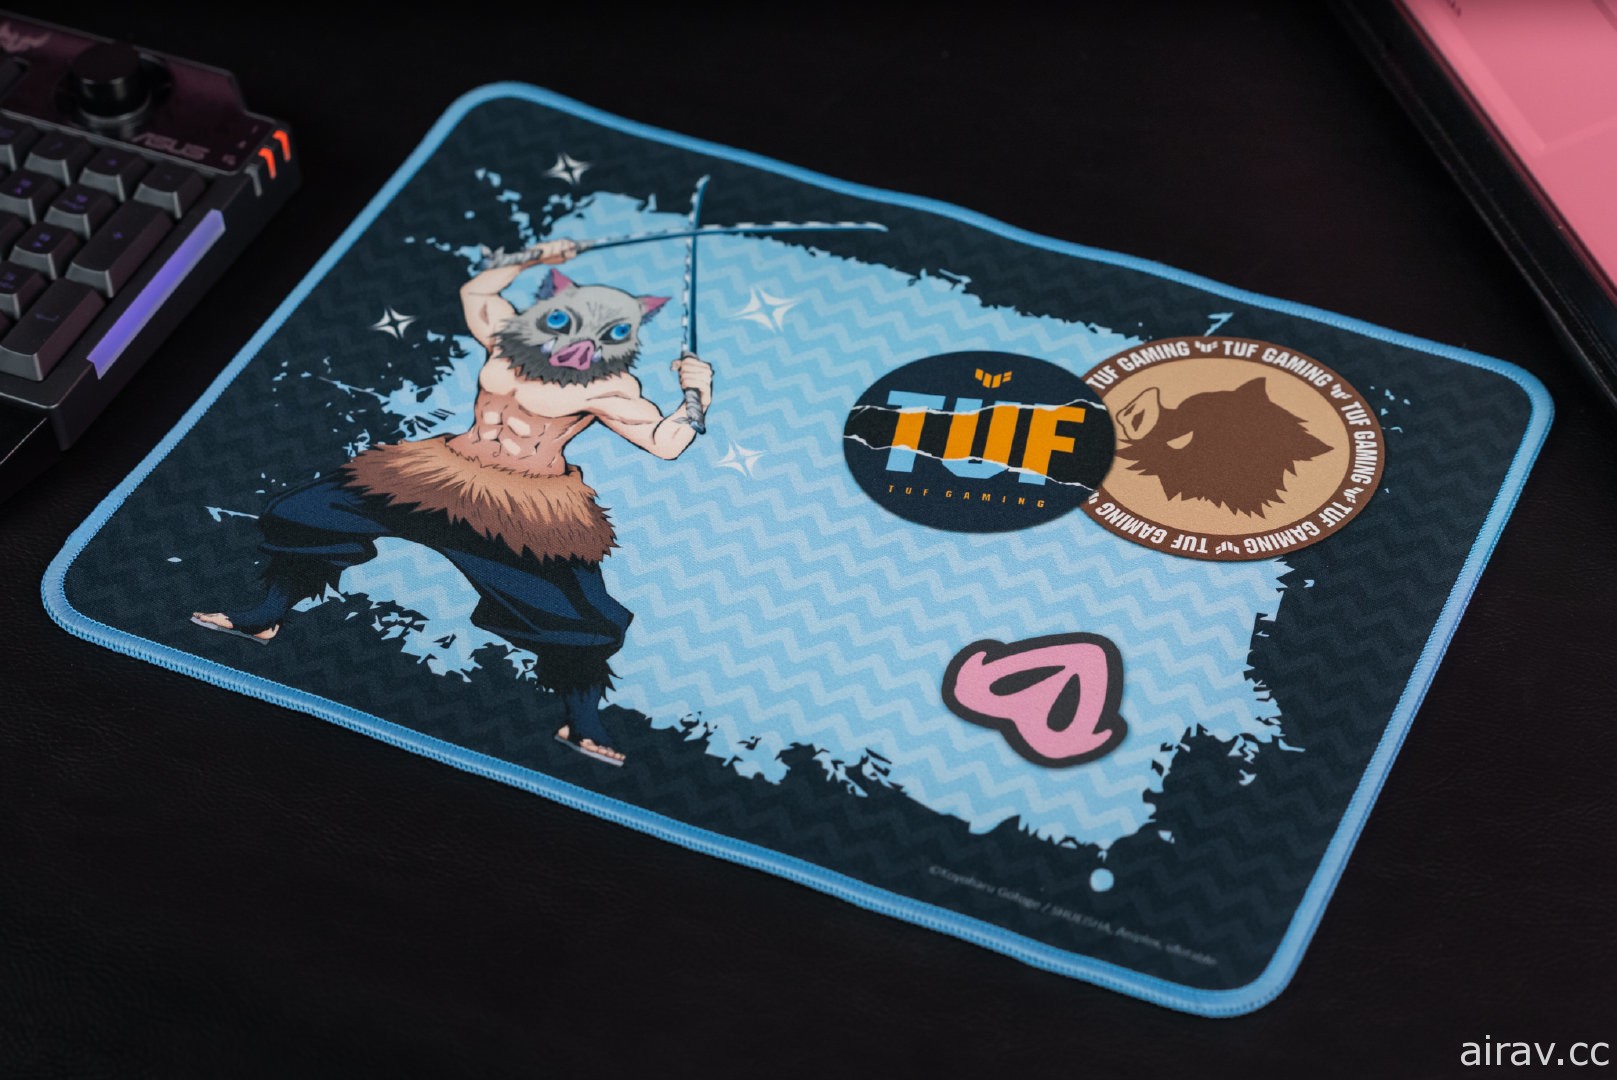 ROG 在中國推出《鬼滅之刃》禰豆子主題 TUF Gaming GT301 限定版電腦機殼